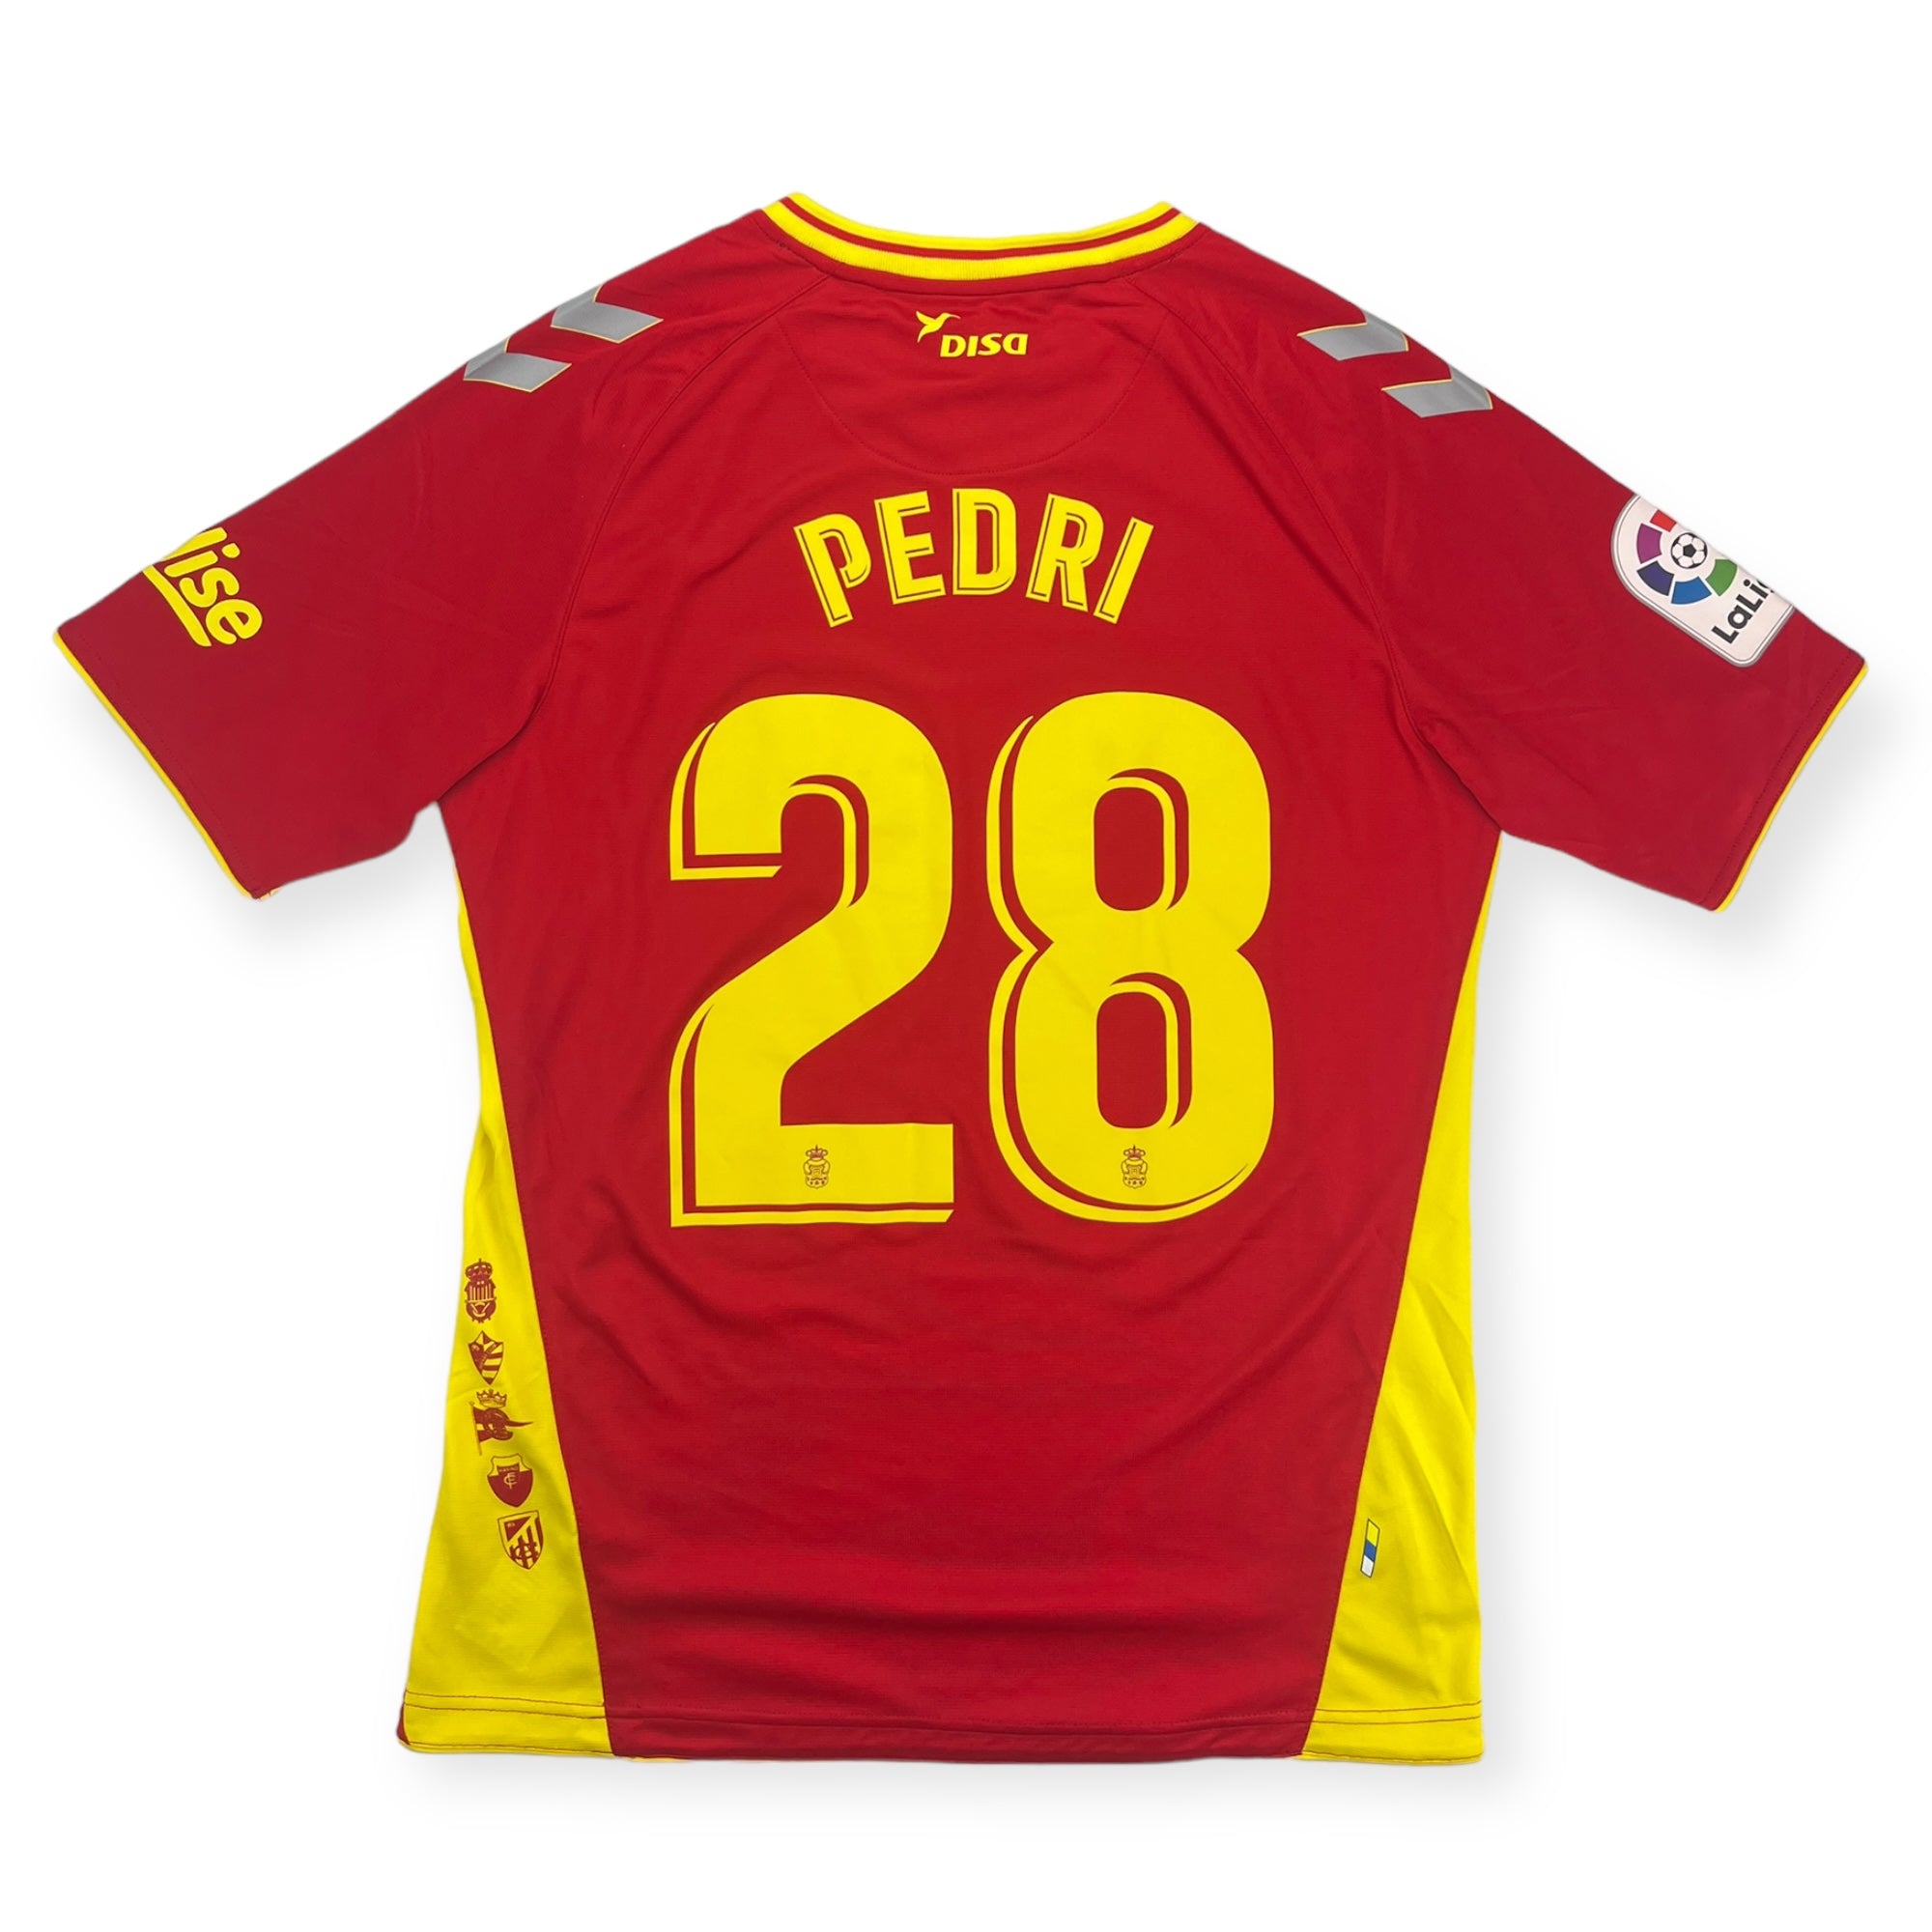 Las Palmas 2019 Away Shirt, Pedri 28